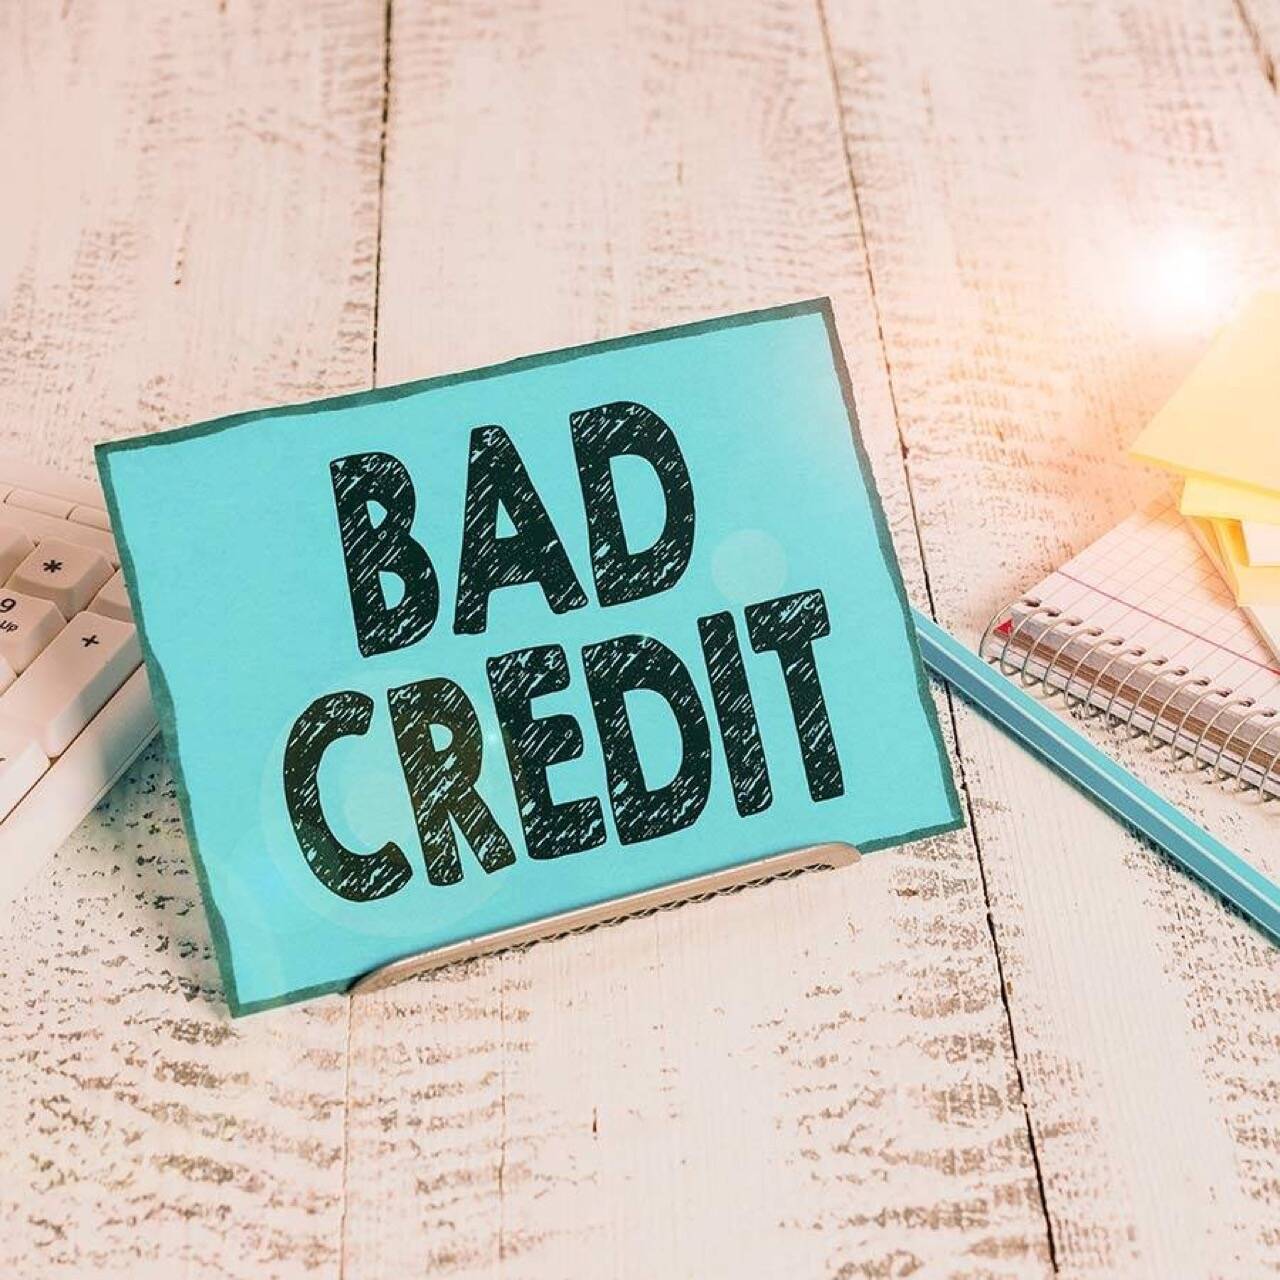 9 Computer Financing Loans for Bad Credit (Dec. 2023)